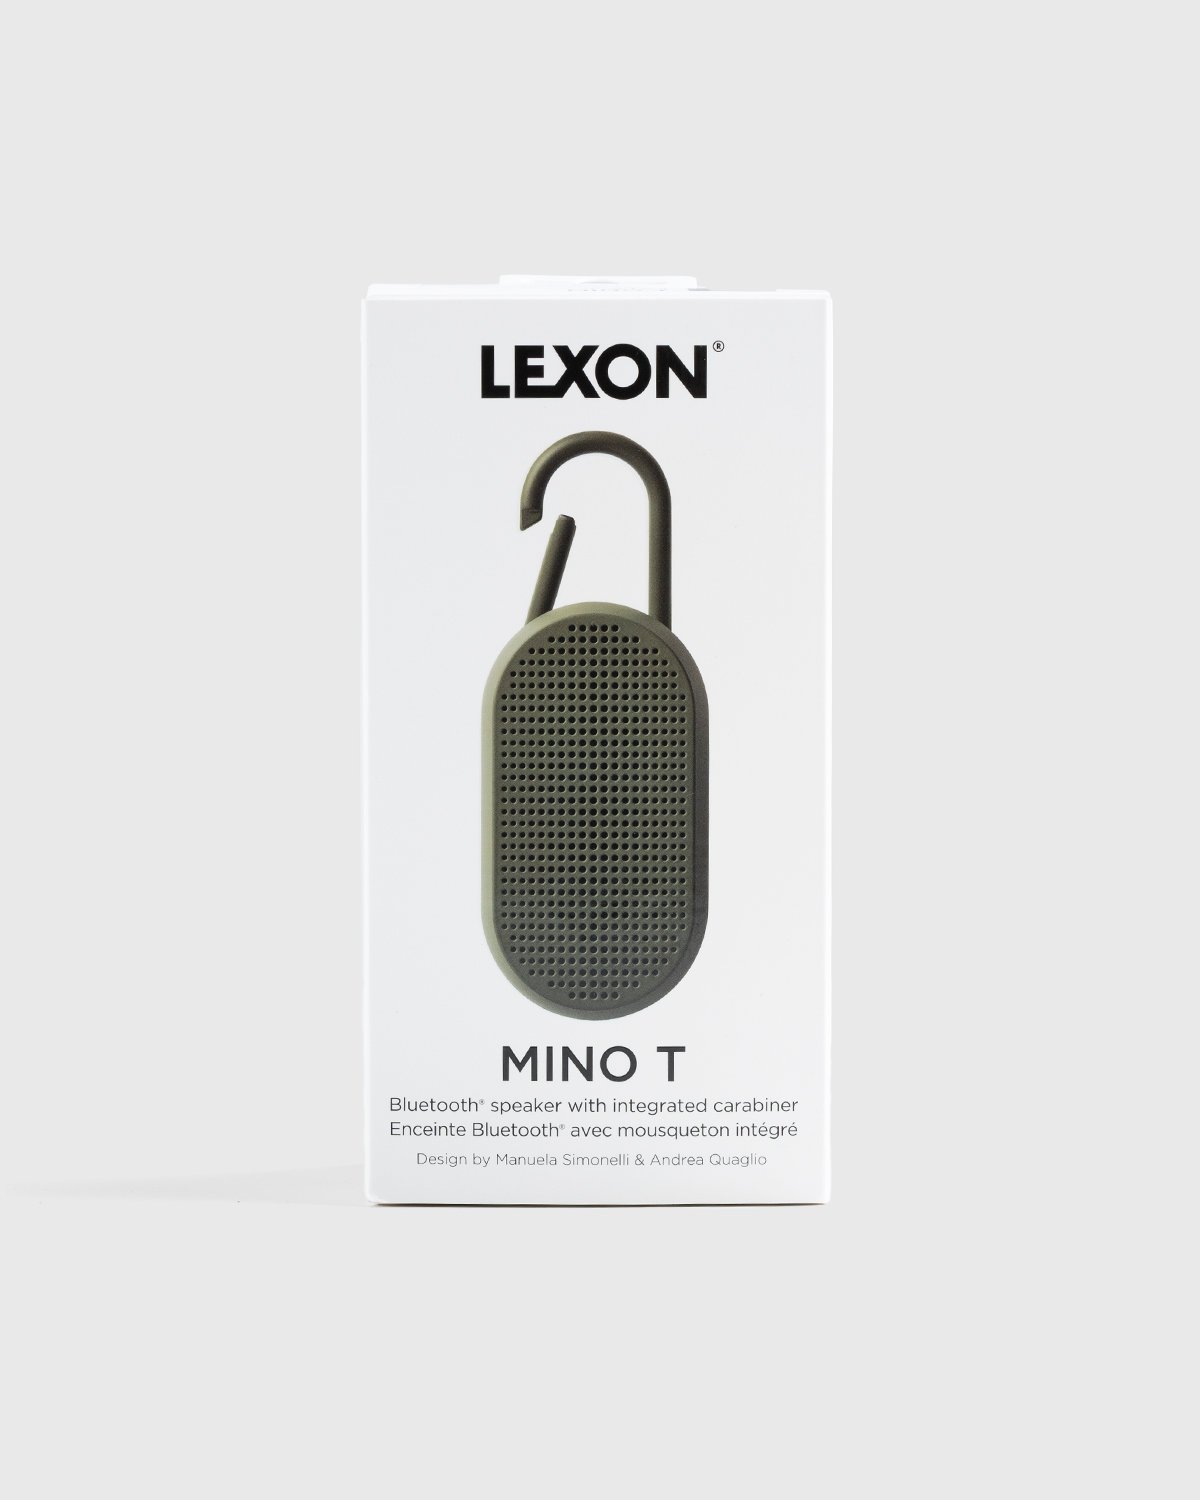 Carhartt WIP - Lexon Mino T Speaker Cypress - Lifestyle - Green - Image 4